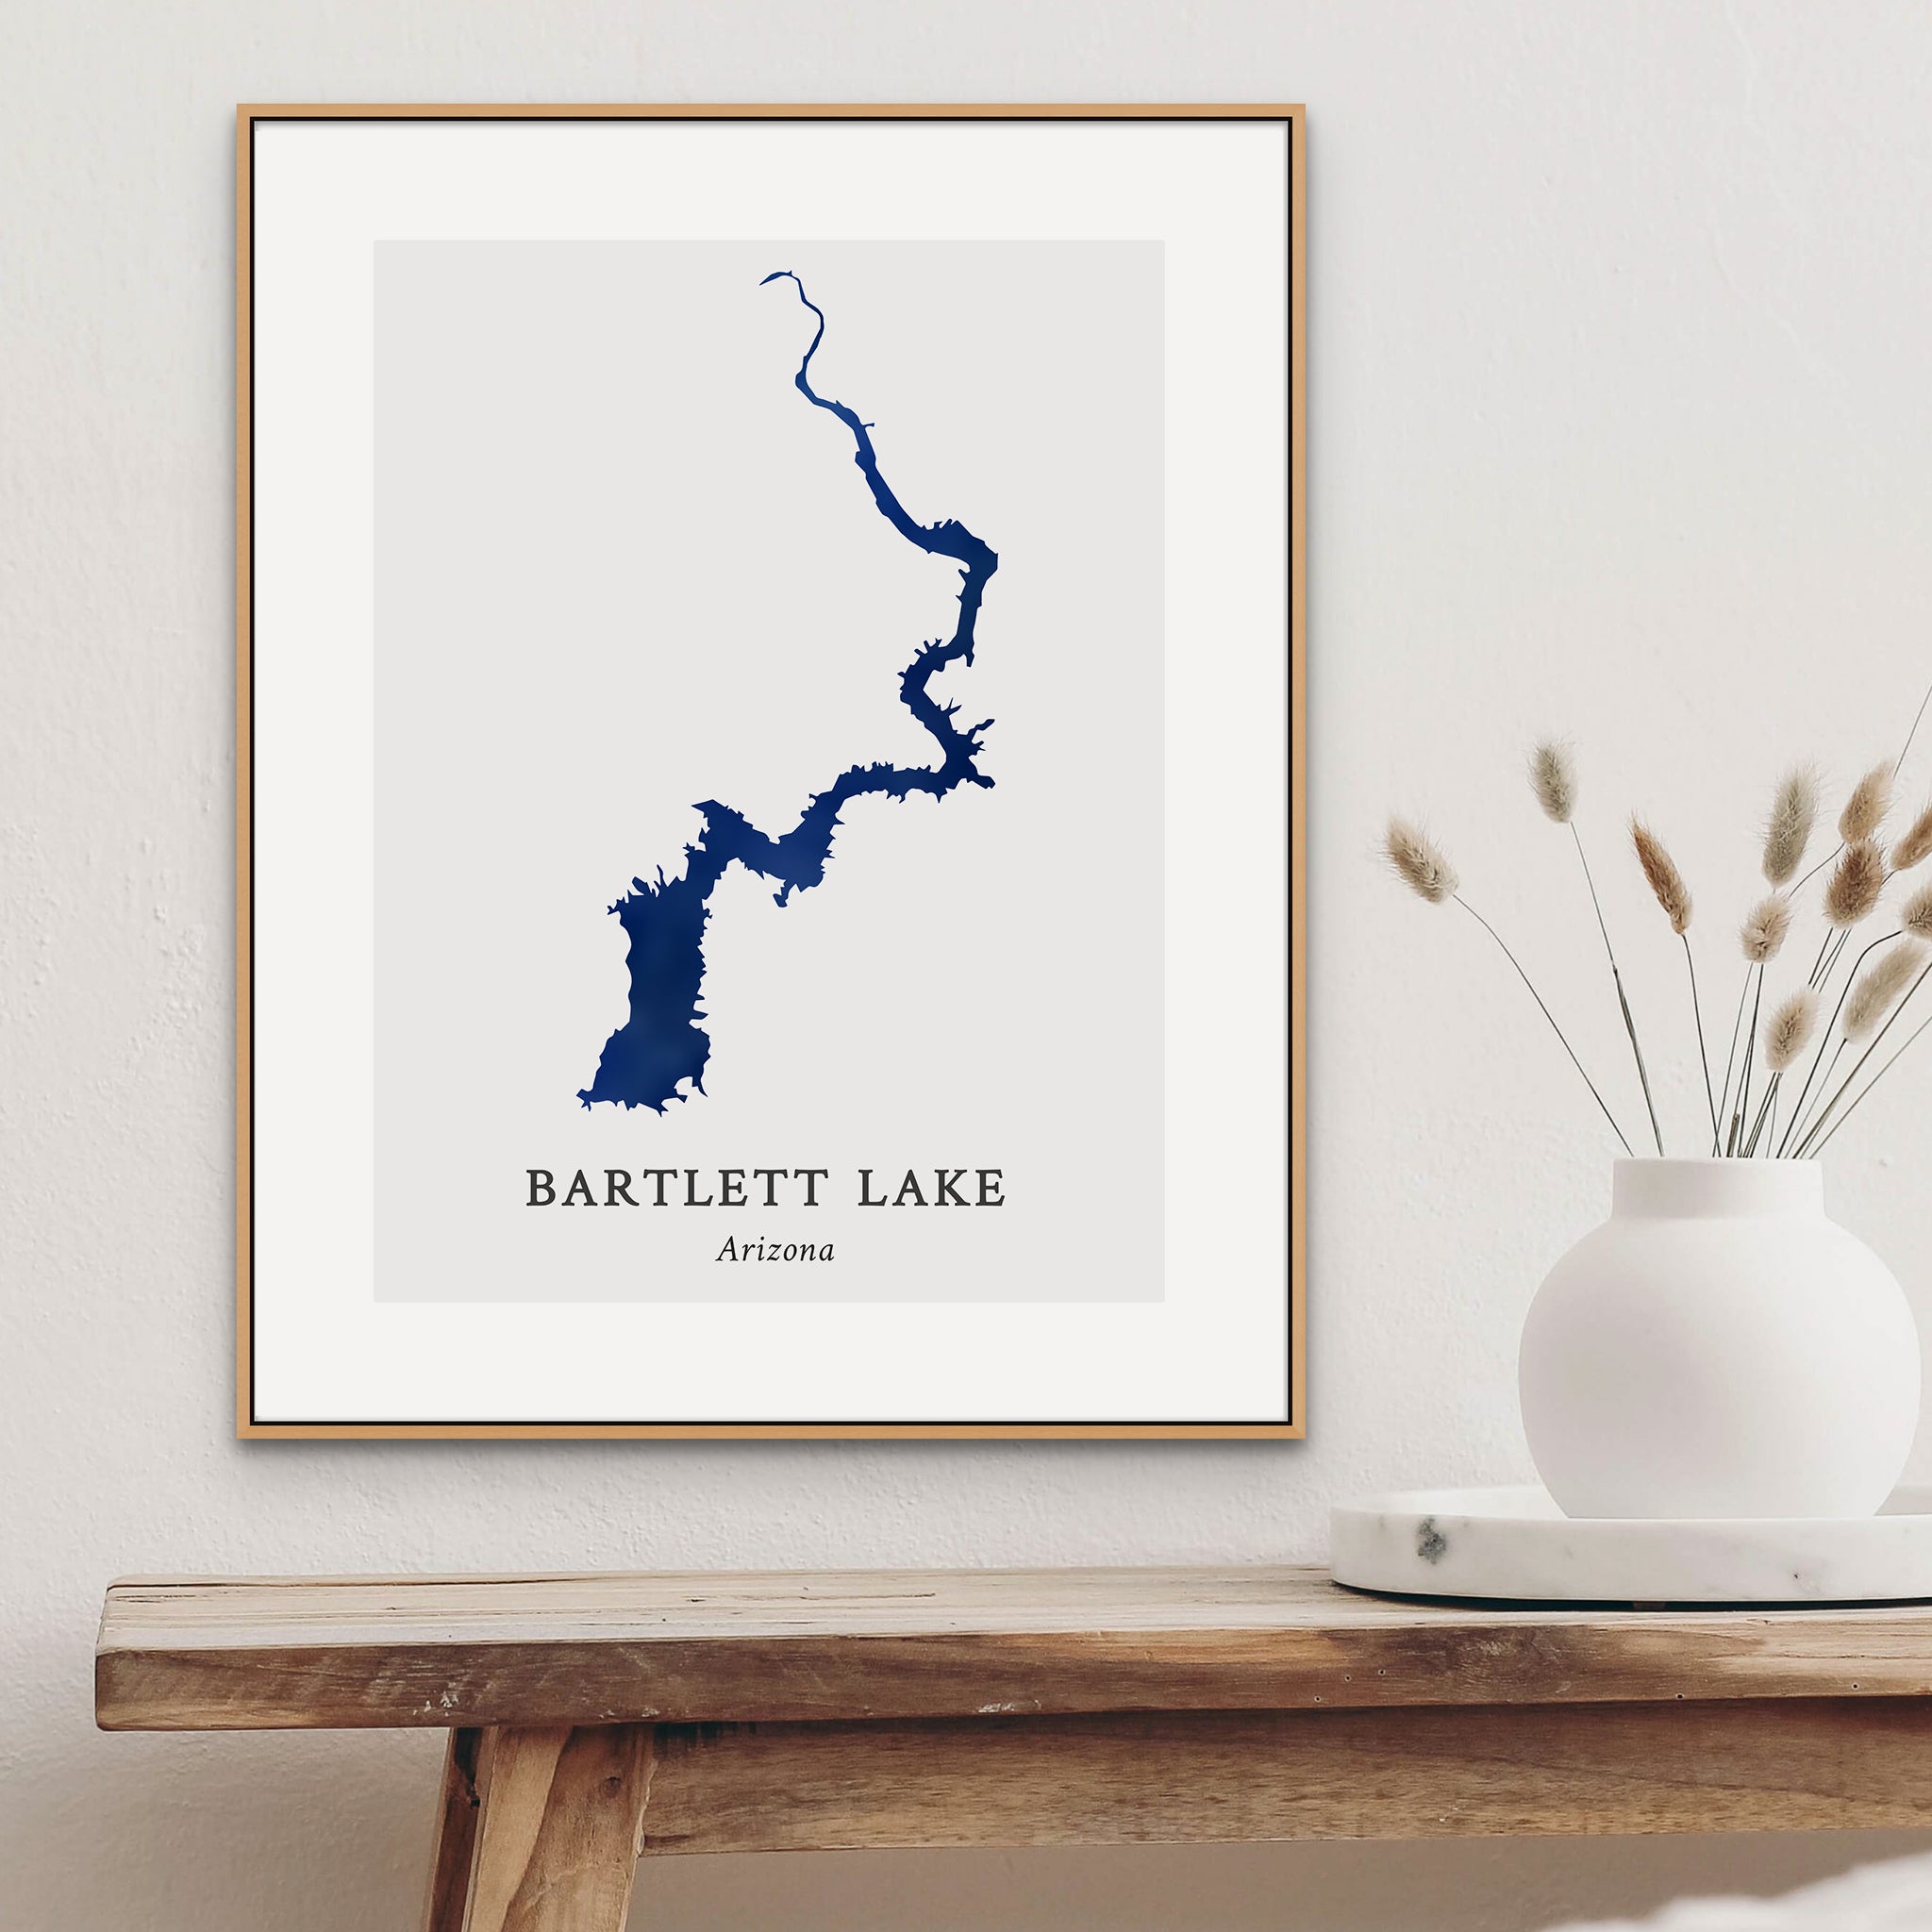 Arizona - Bartlett Lake Map